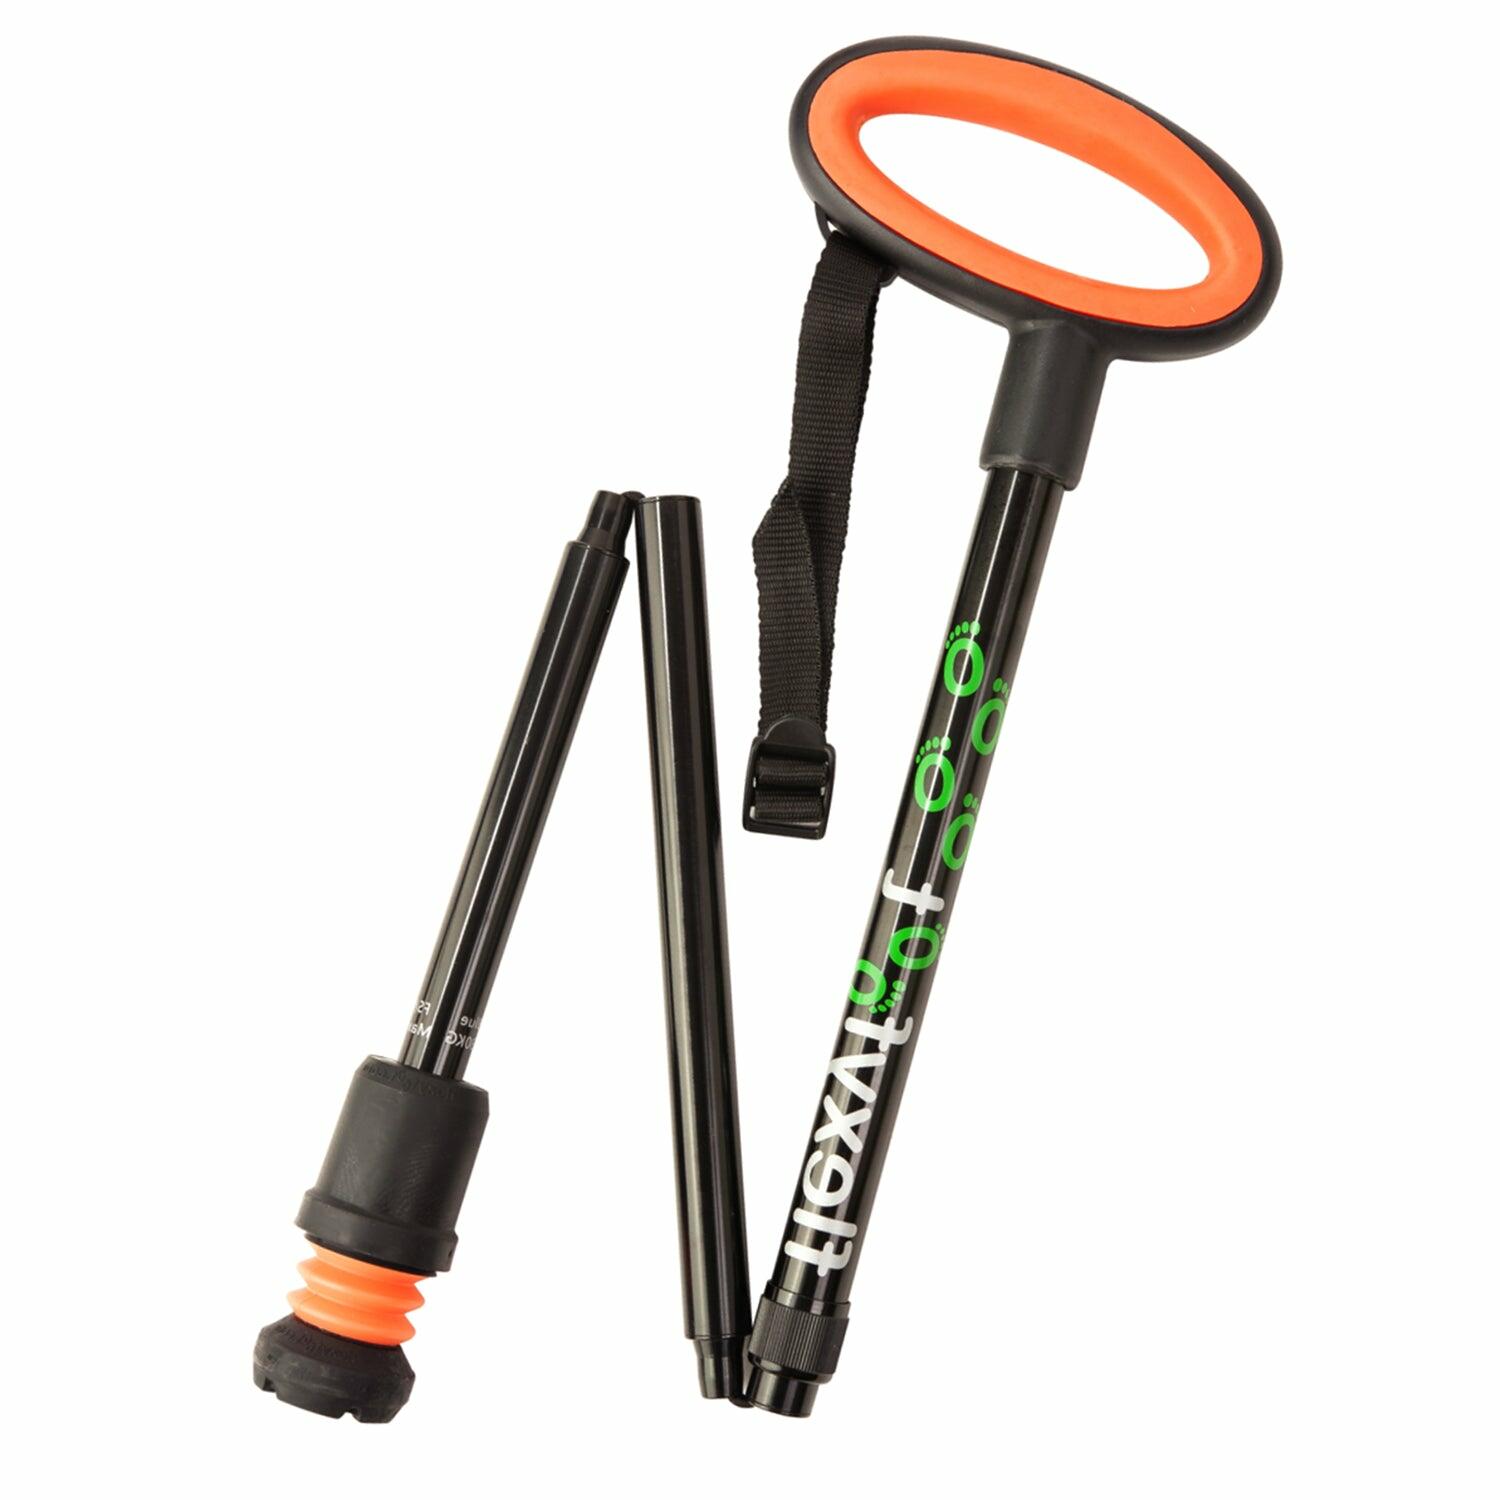 A black Flexyfoot Premium Oval Handle Folding Walking Stick